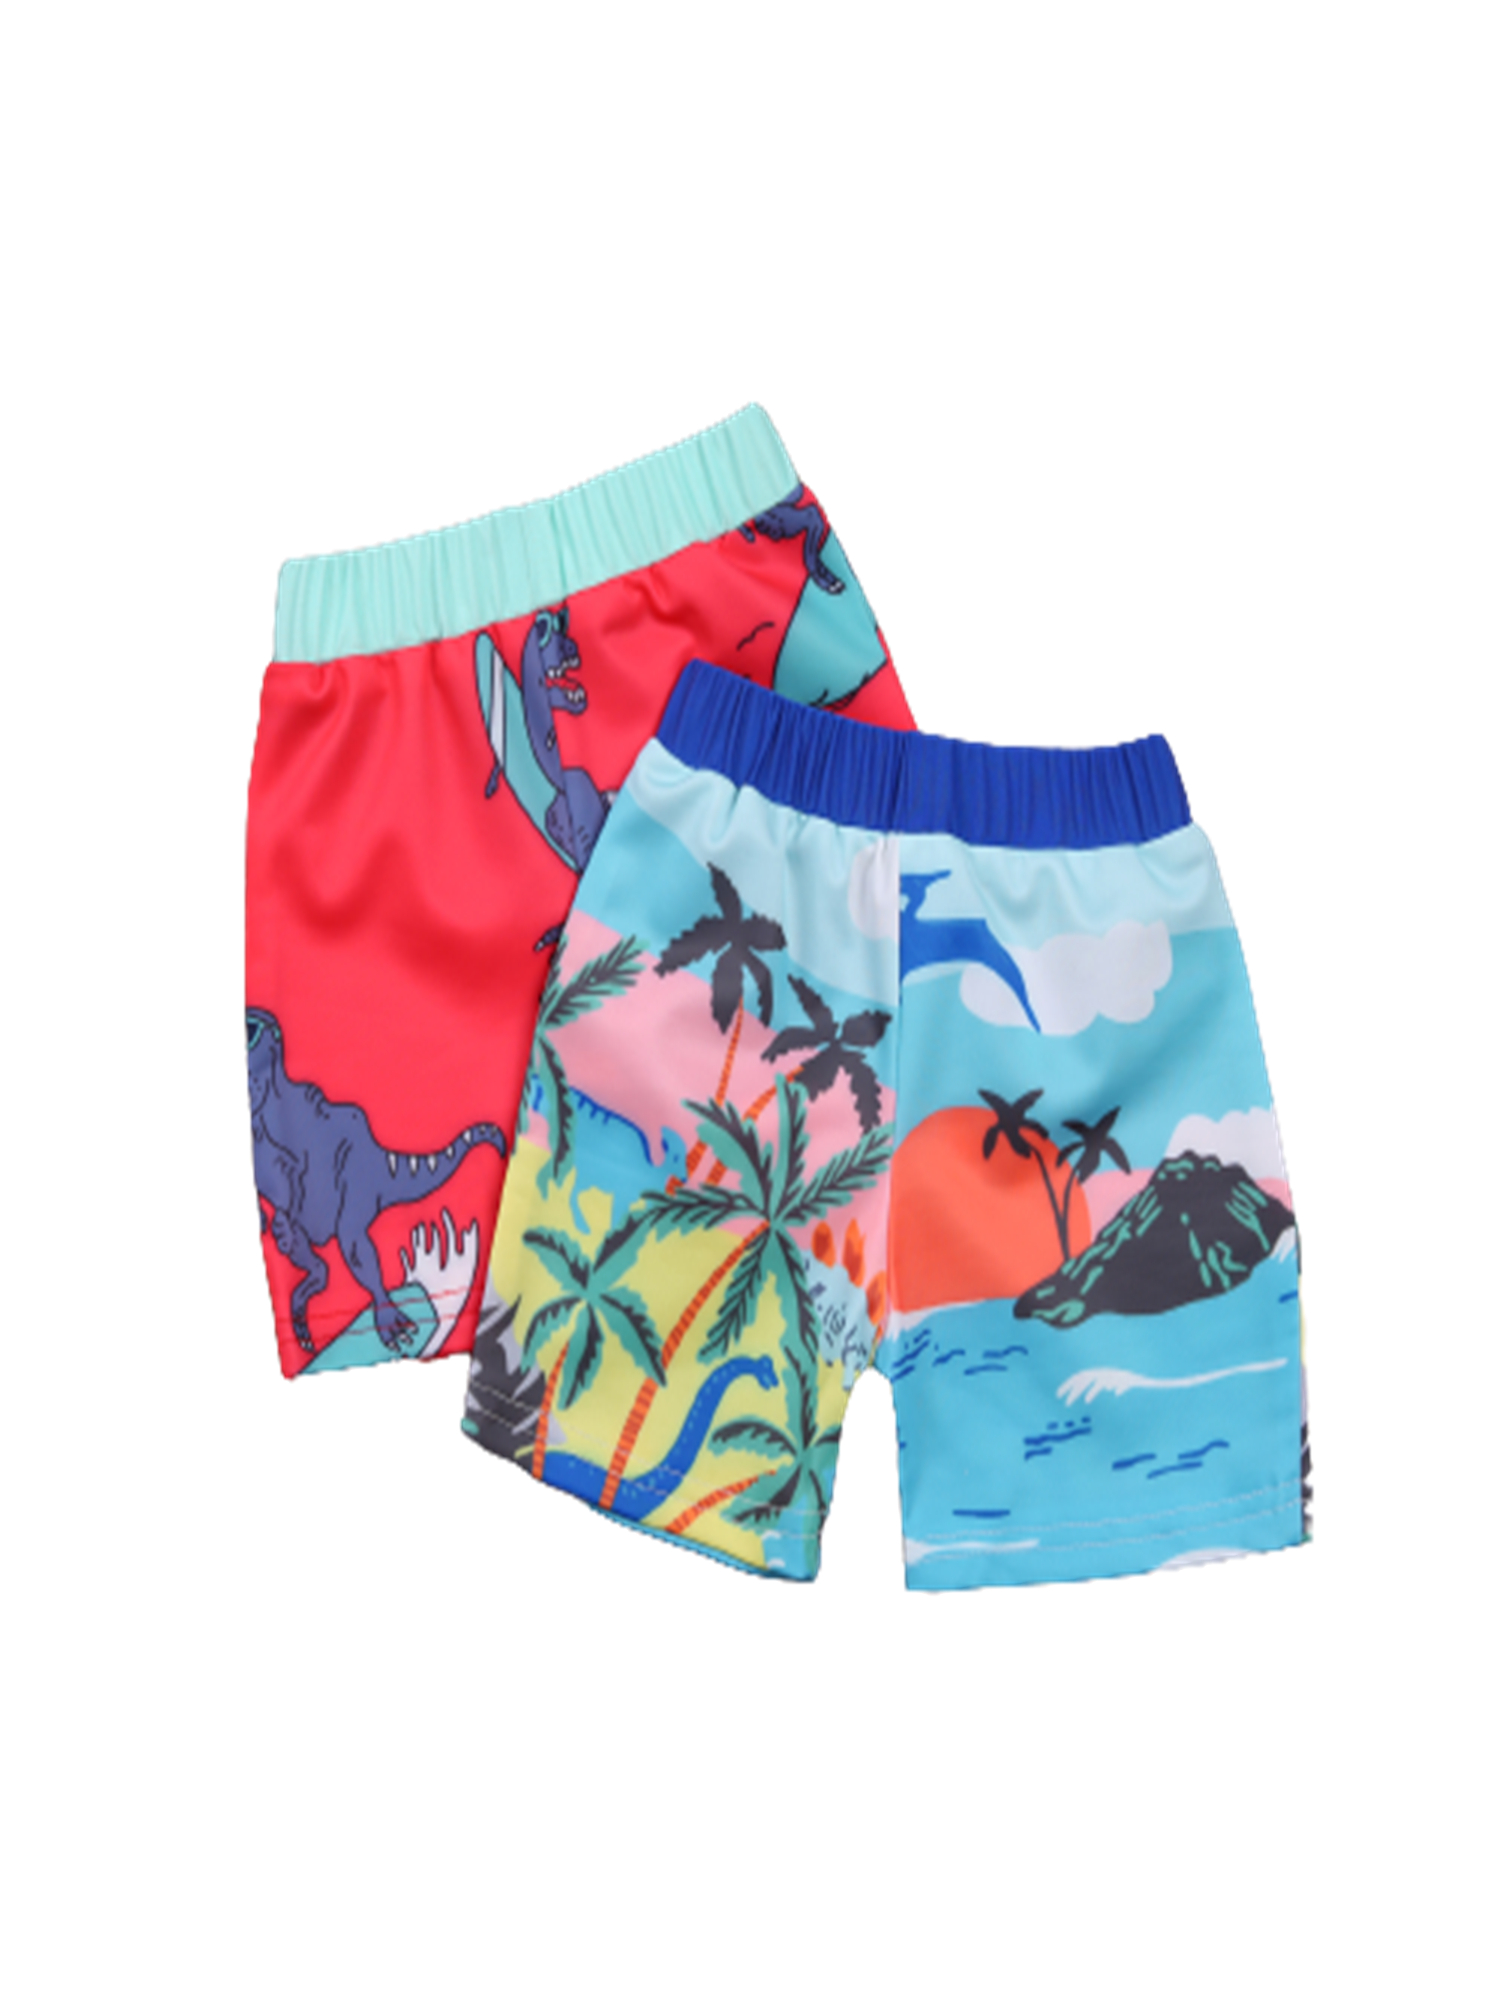 Binwwede Boys Swimwear Trunks Fish Printed Swim Shorts Toddler Baby Little Boy Summer Beach Swimsuits - image 2 of 6